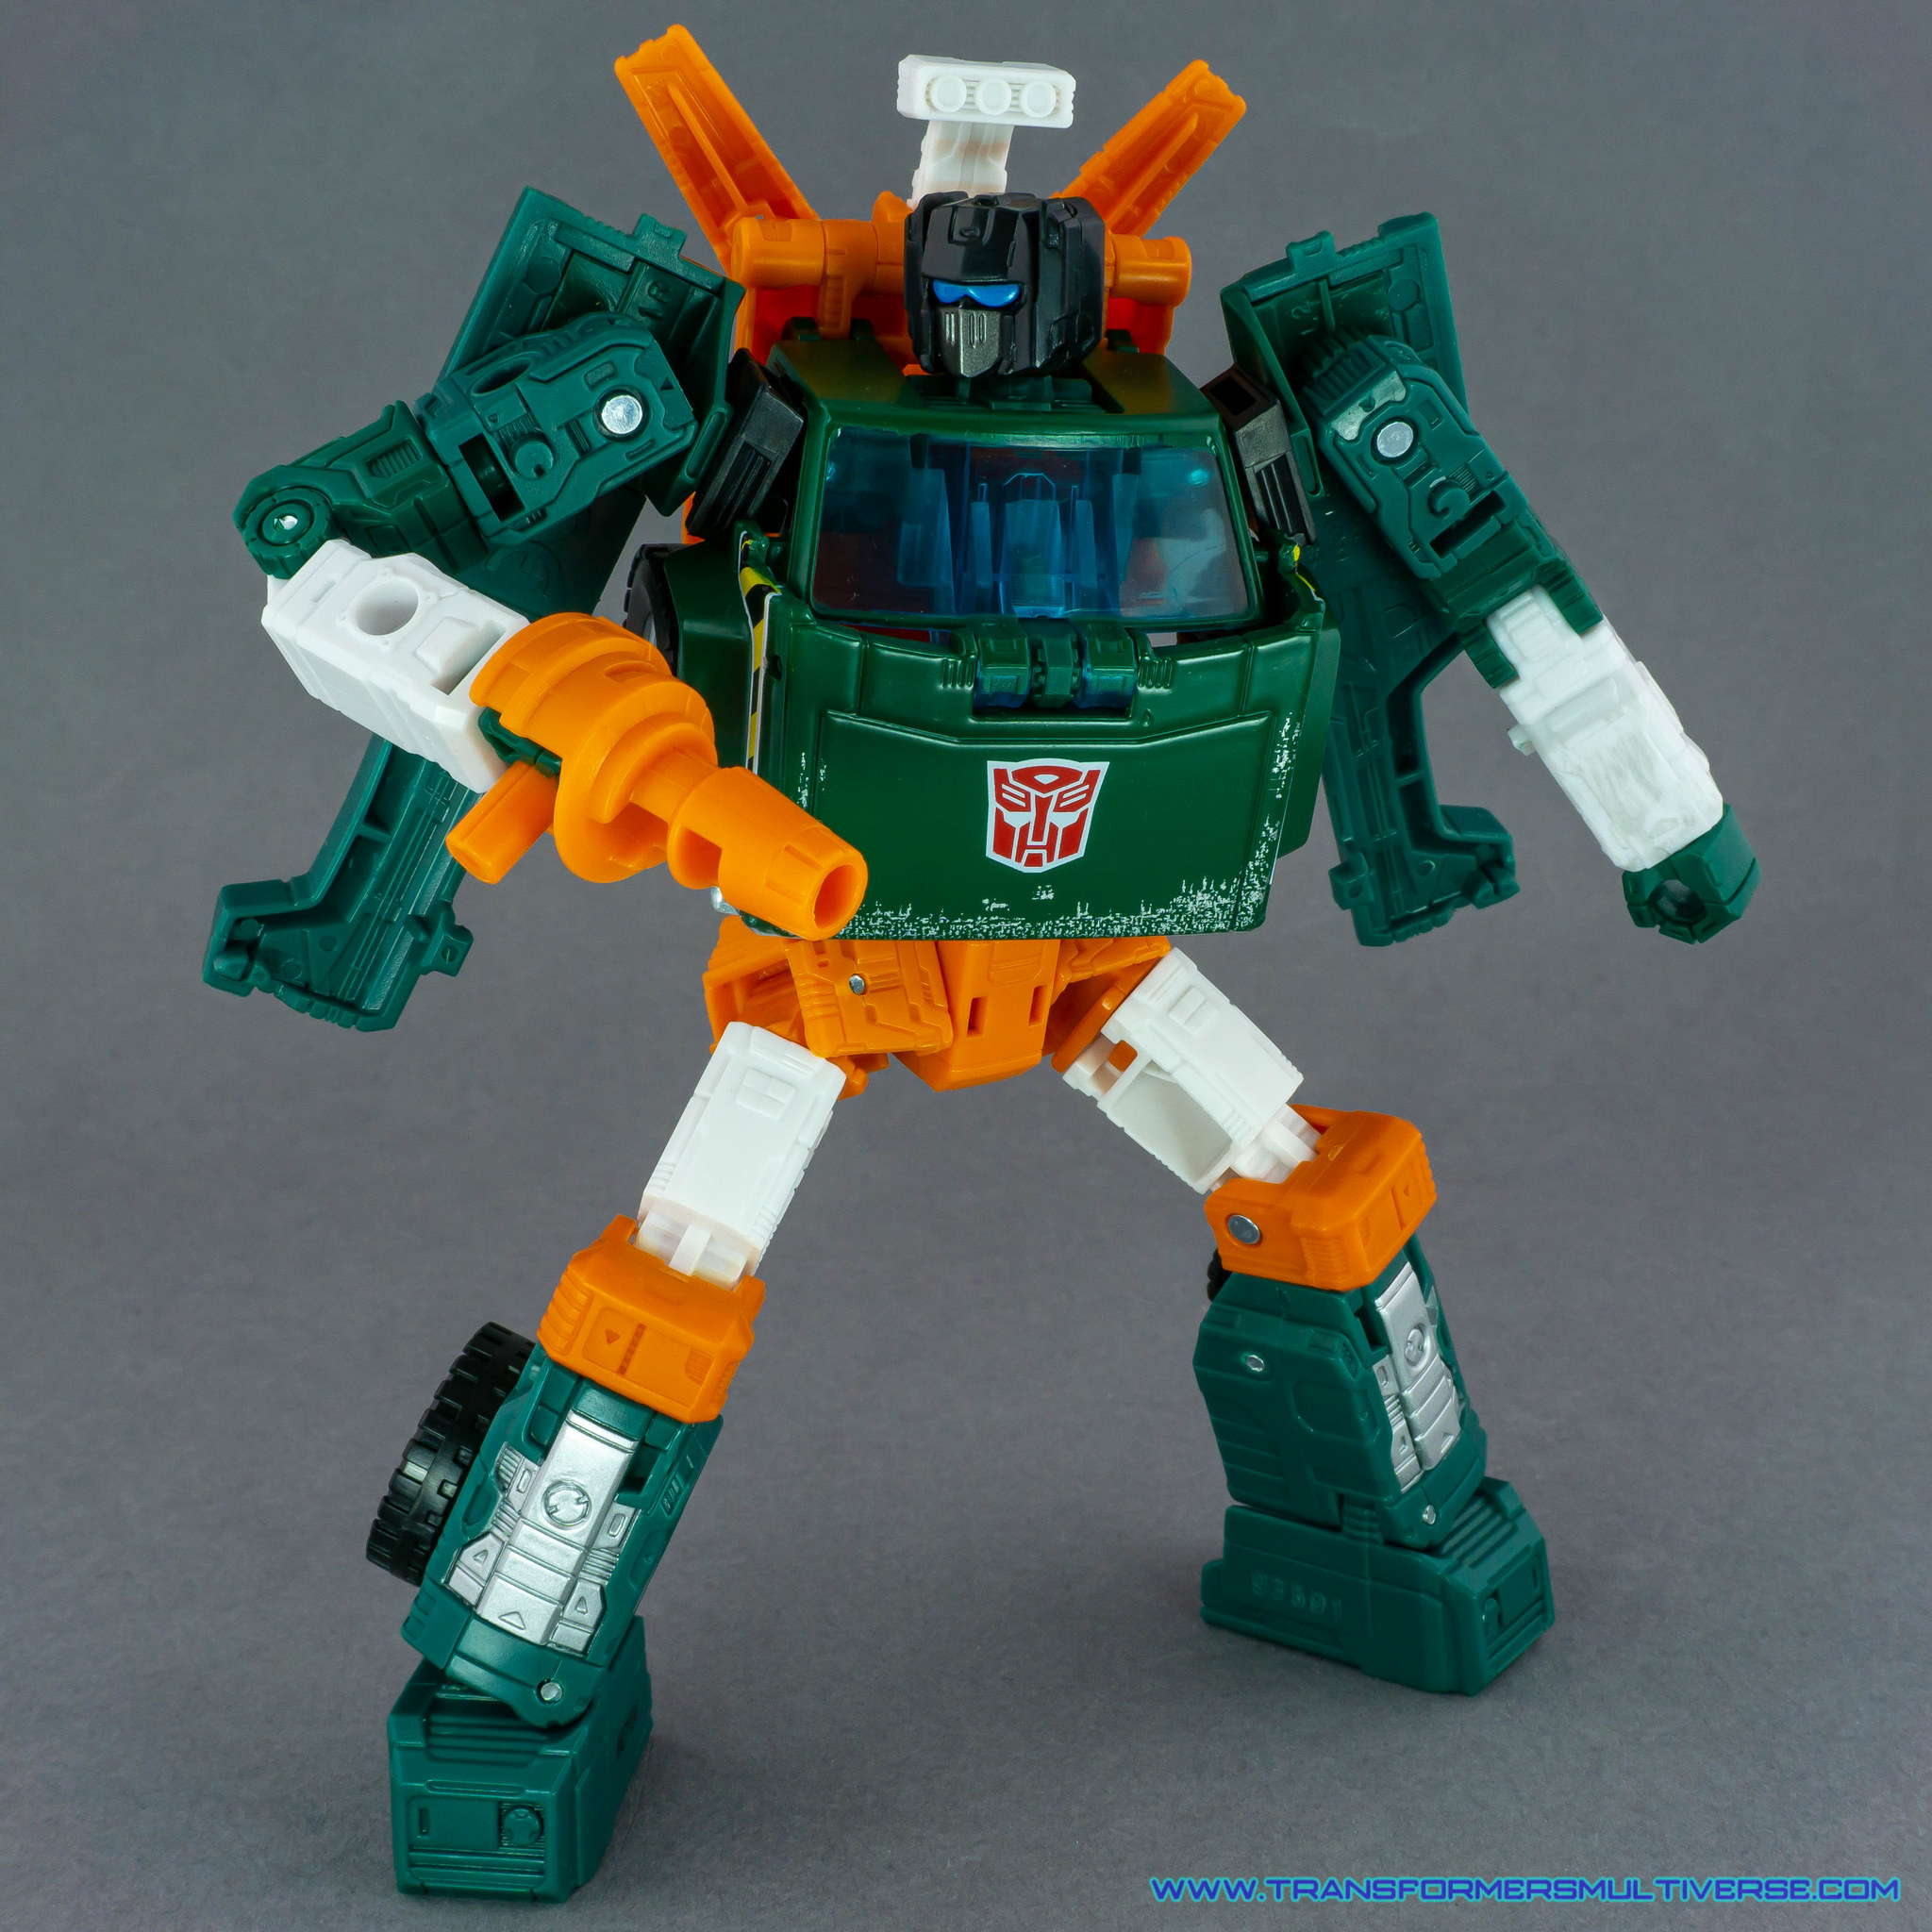 Transformers Earthrise Hoist robot mode, posed